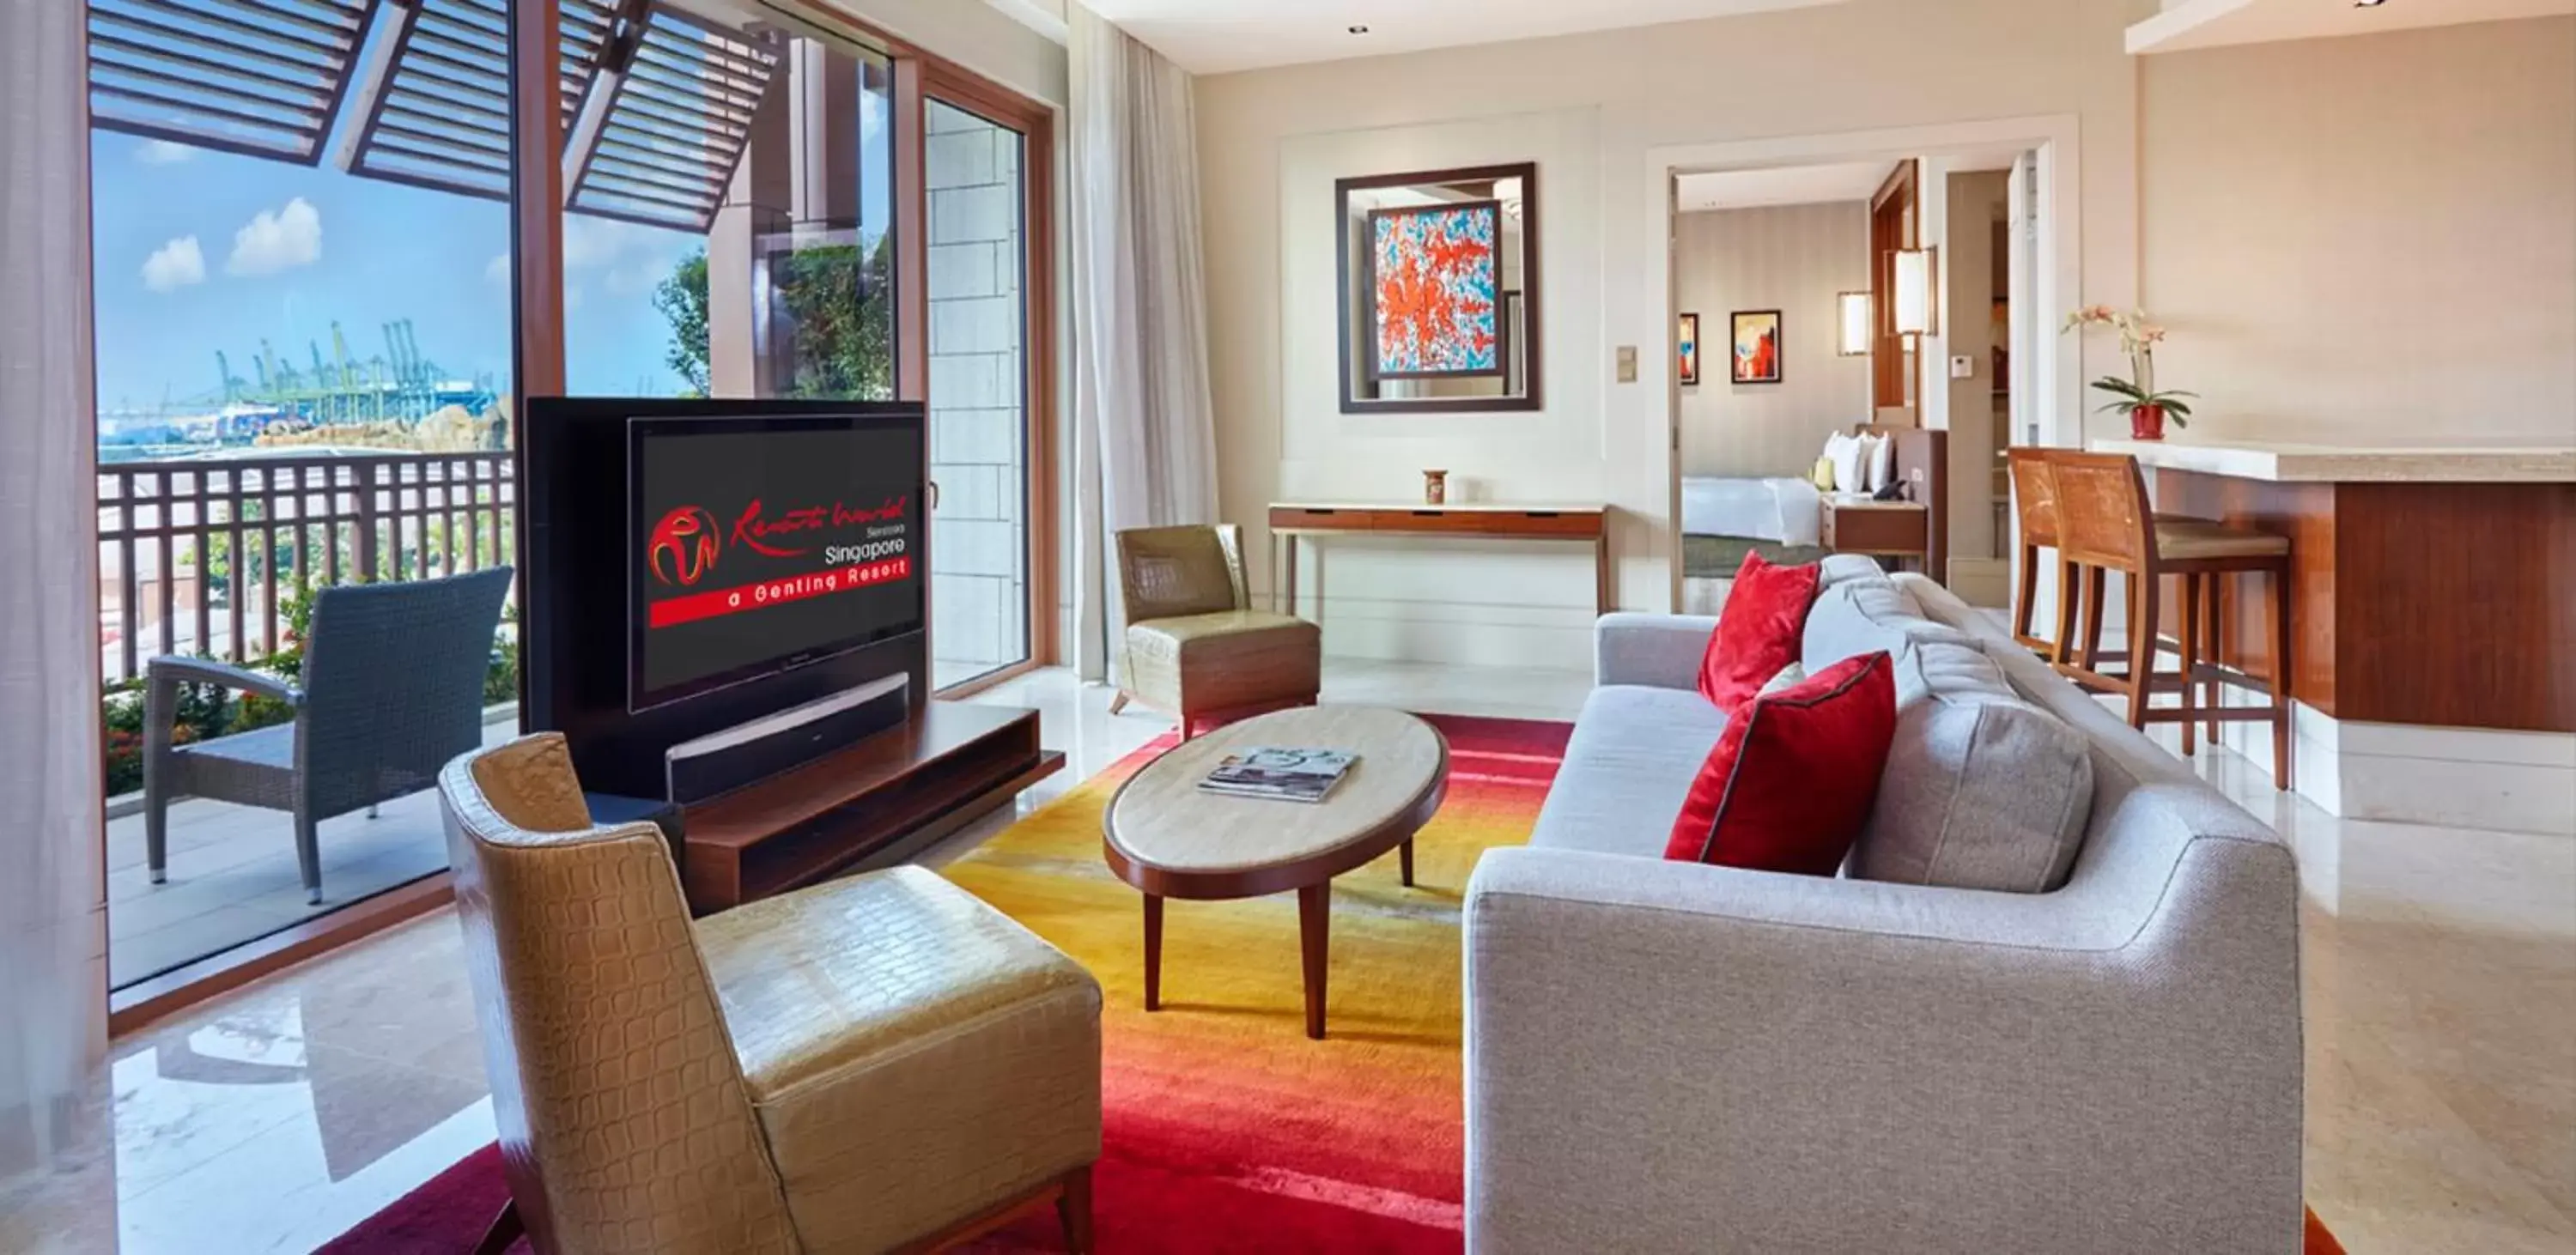 TV and multimedia, Lounge/Bar in Resorts World Sentosa - Equarius Hotel